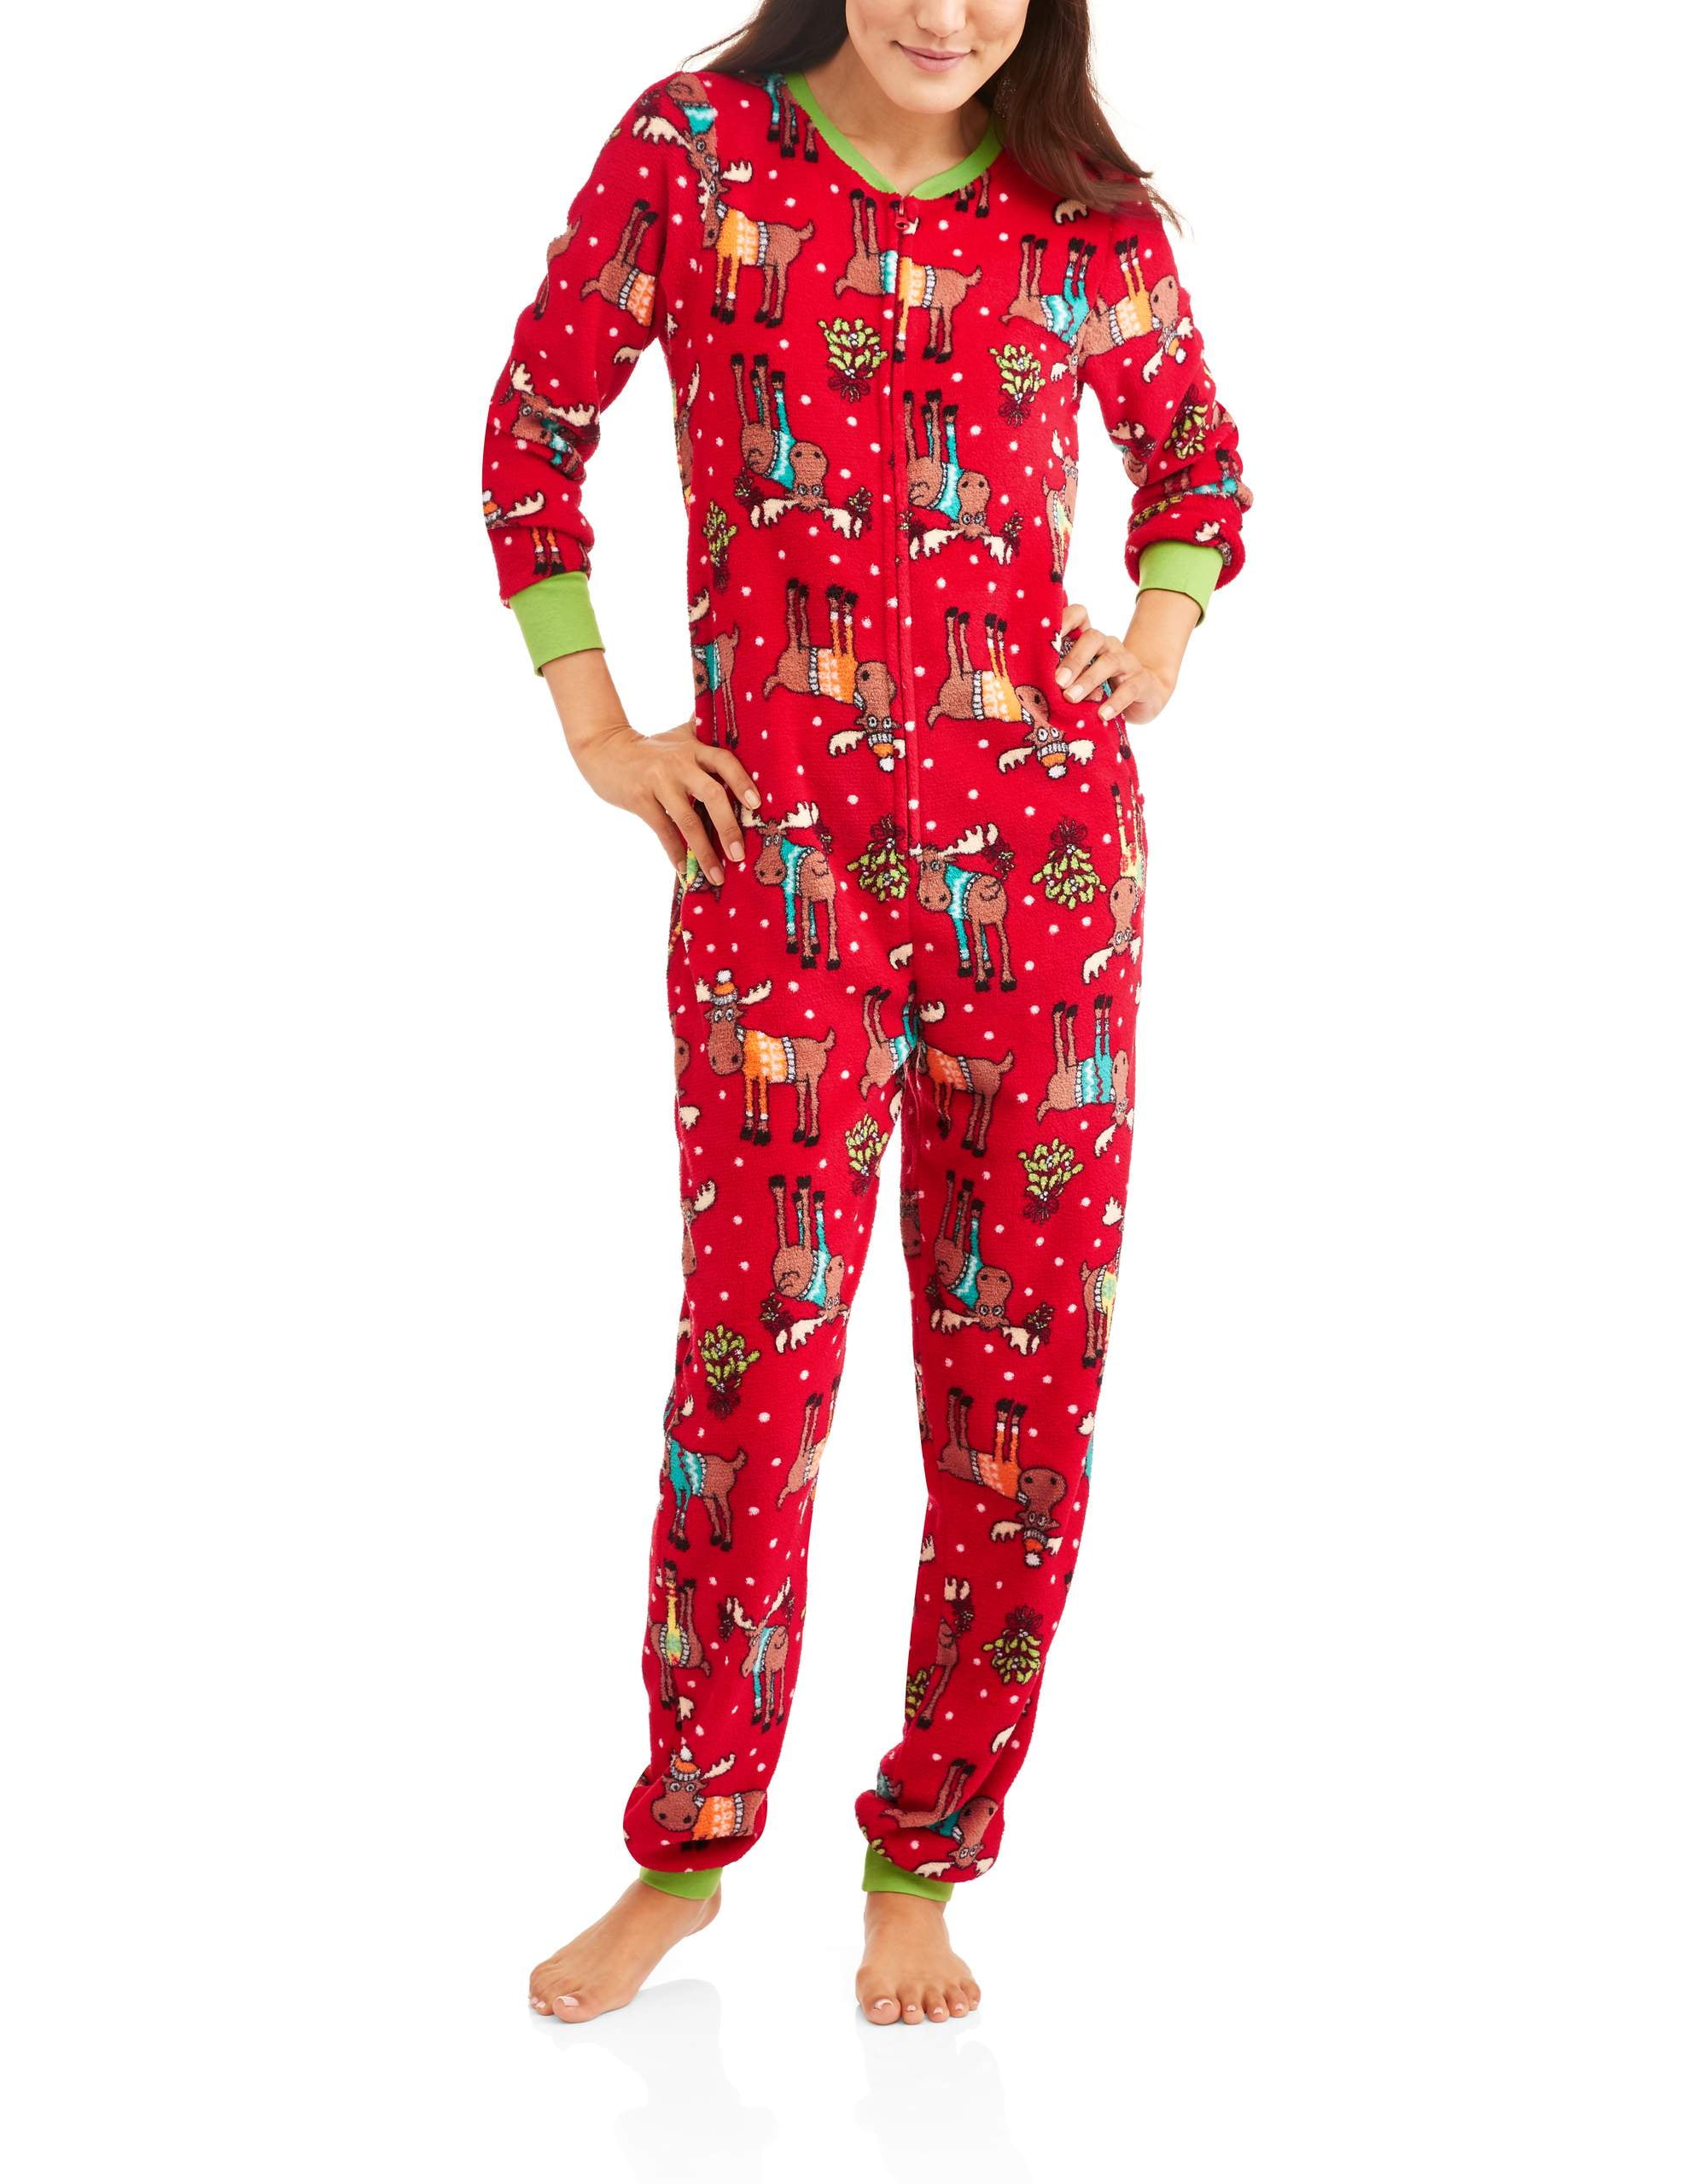 NWT Womens One Piece Footless Union Suit Pajamas Sleepwear Lounge Comfort PJ